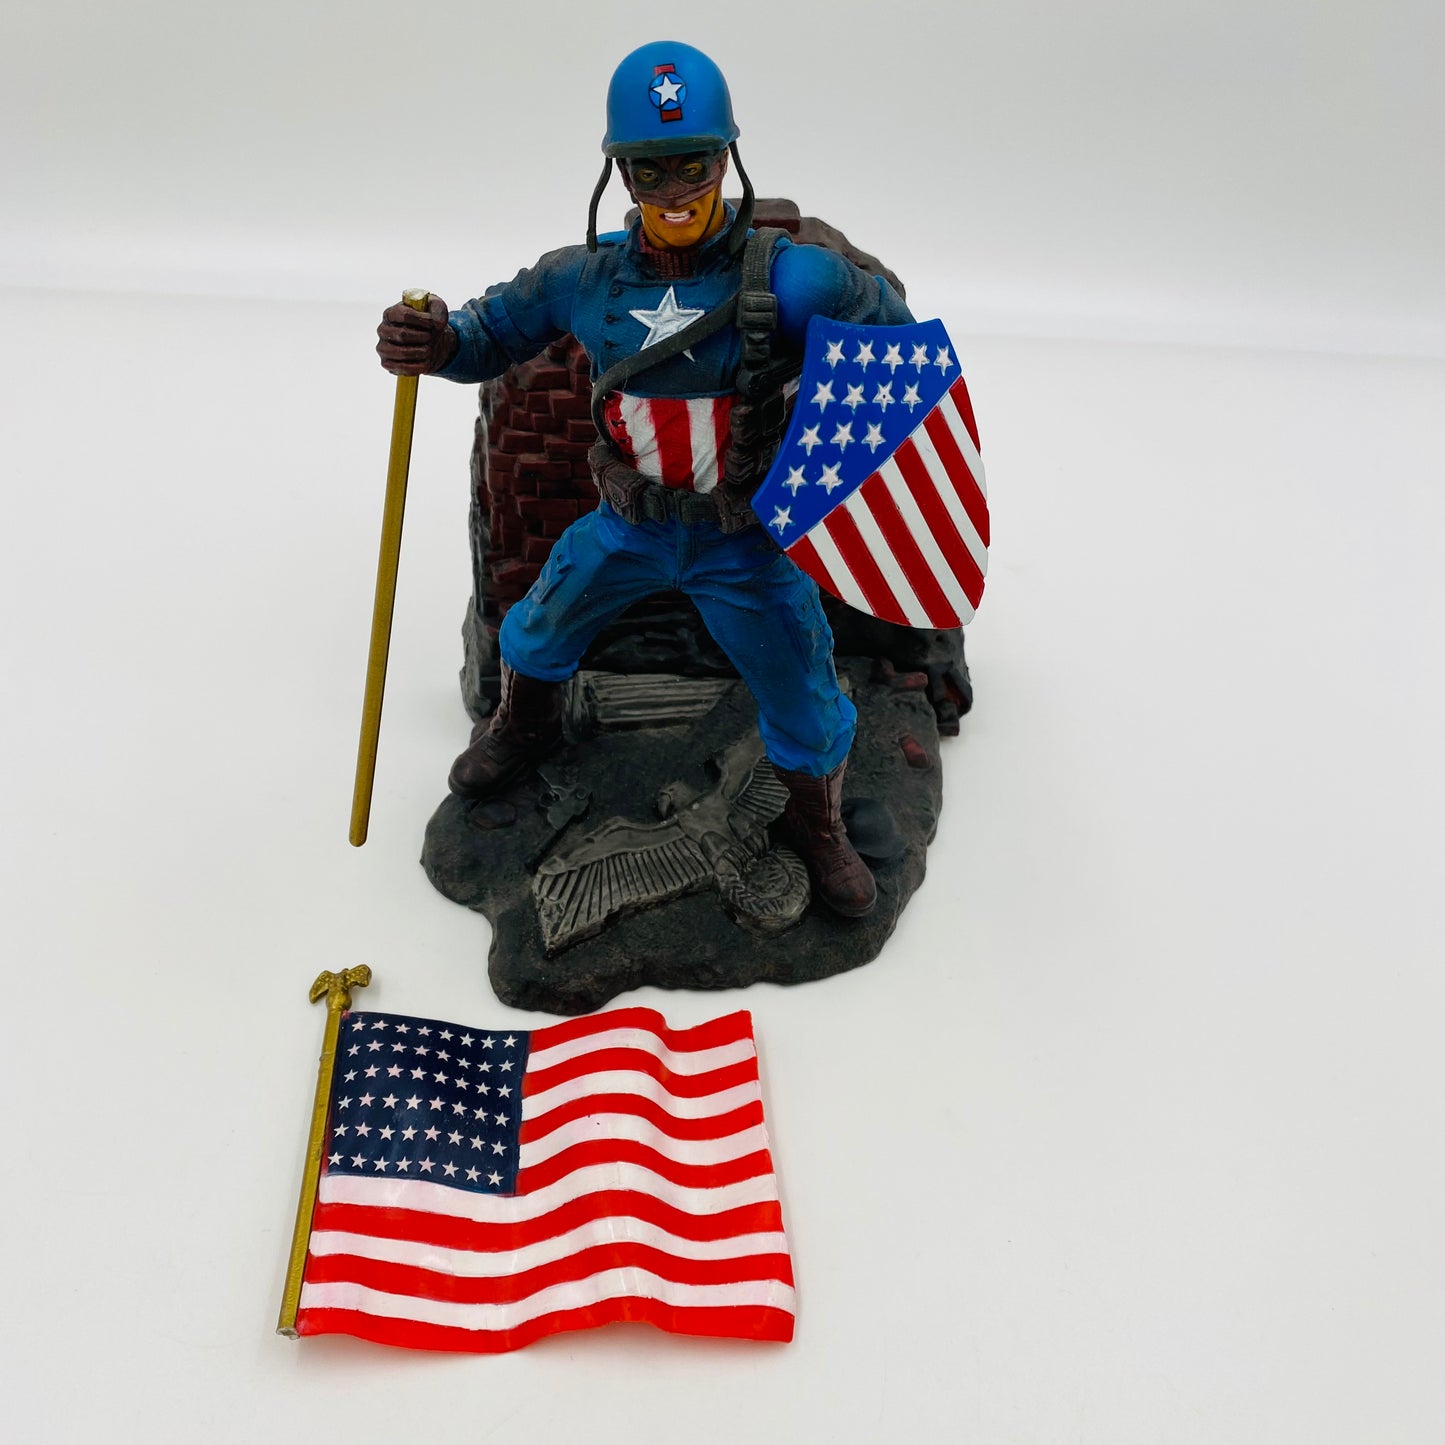 Marvel Select Ultimate Captain America loose 7” figure (2002/2003) Diamond Select Toys